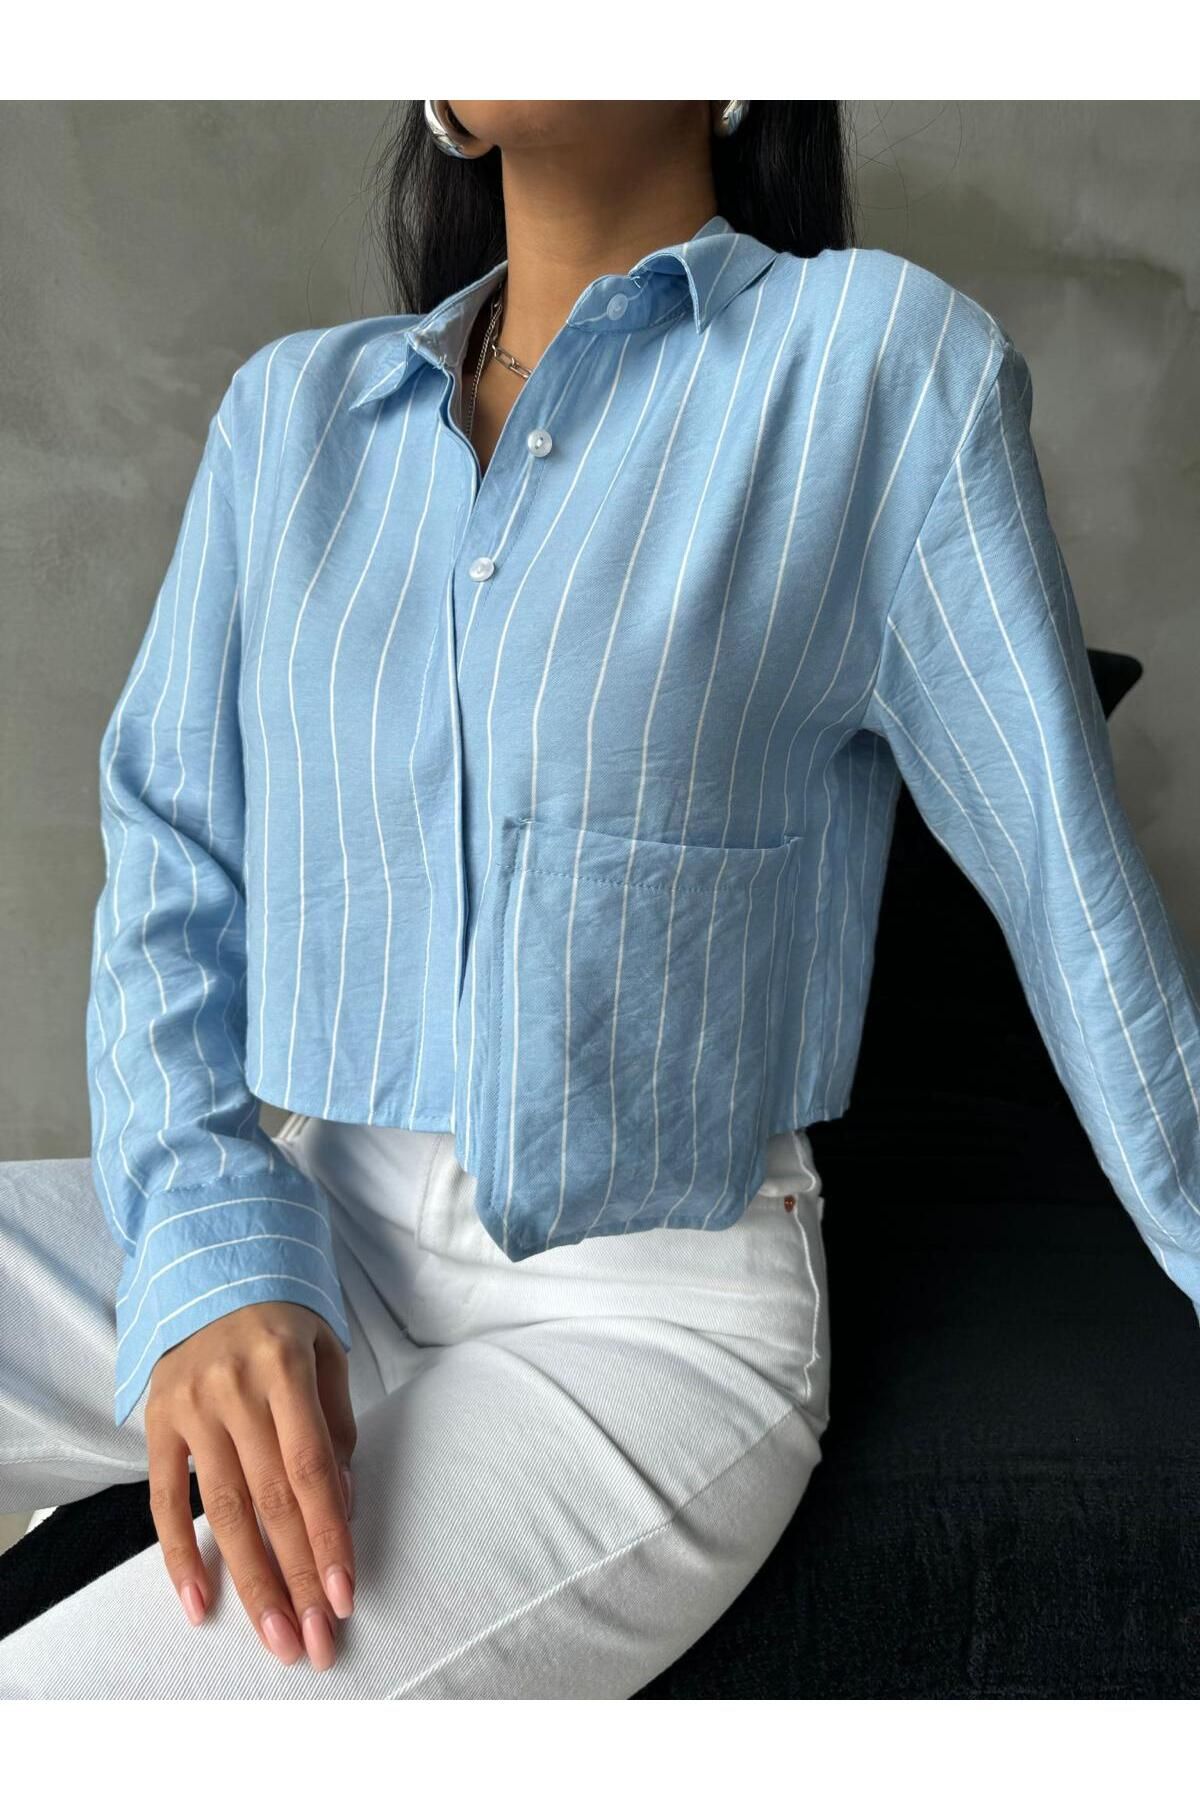 Mixray Kadın Crop Gömlek Cep Detaylı Özel Tasarım Dikey Çizgili